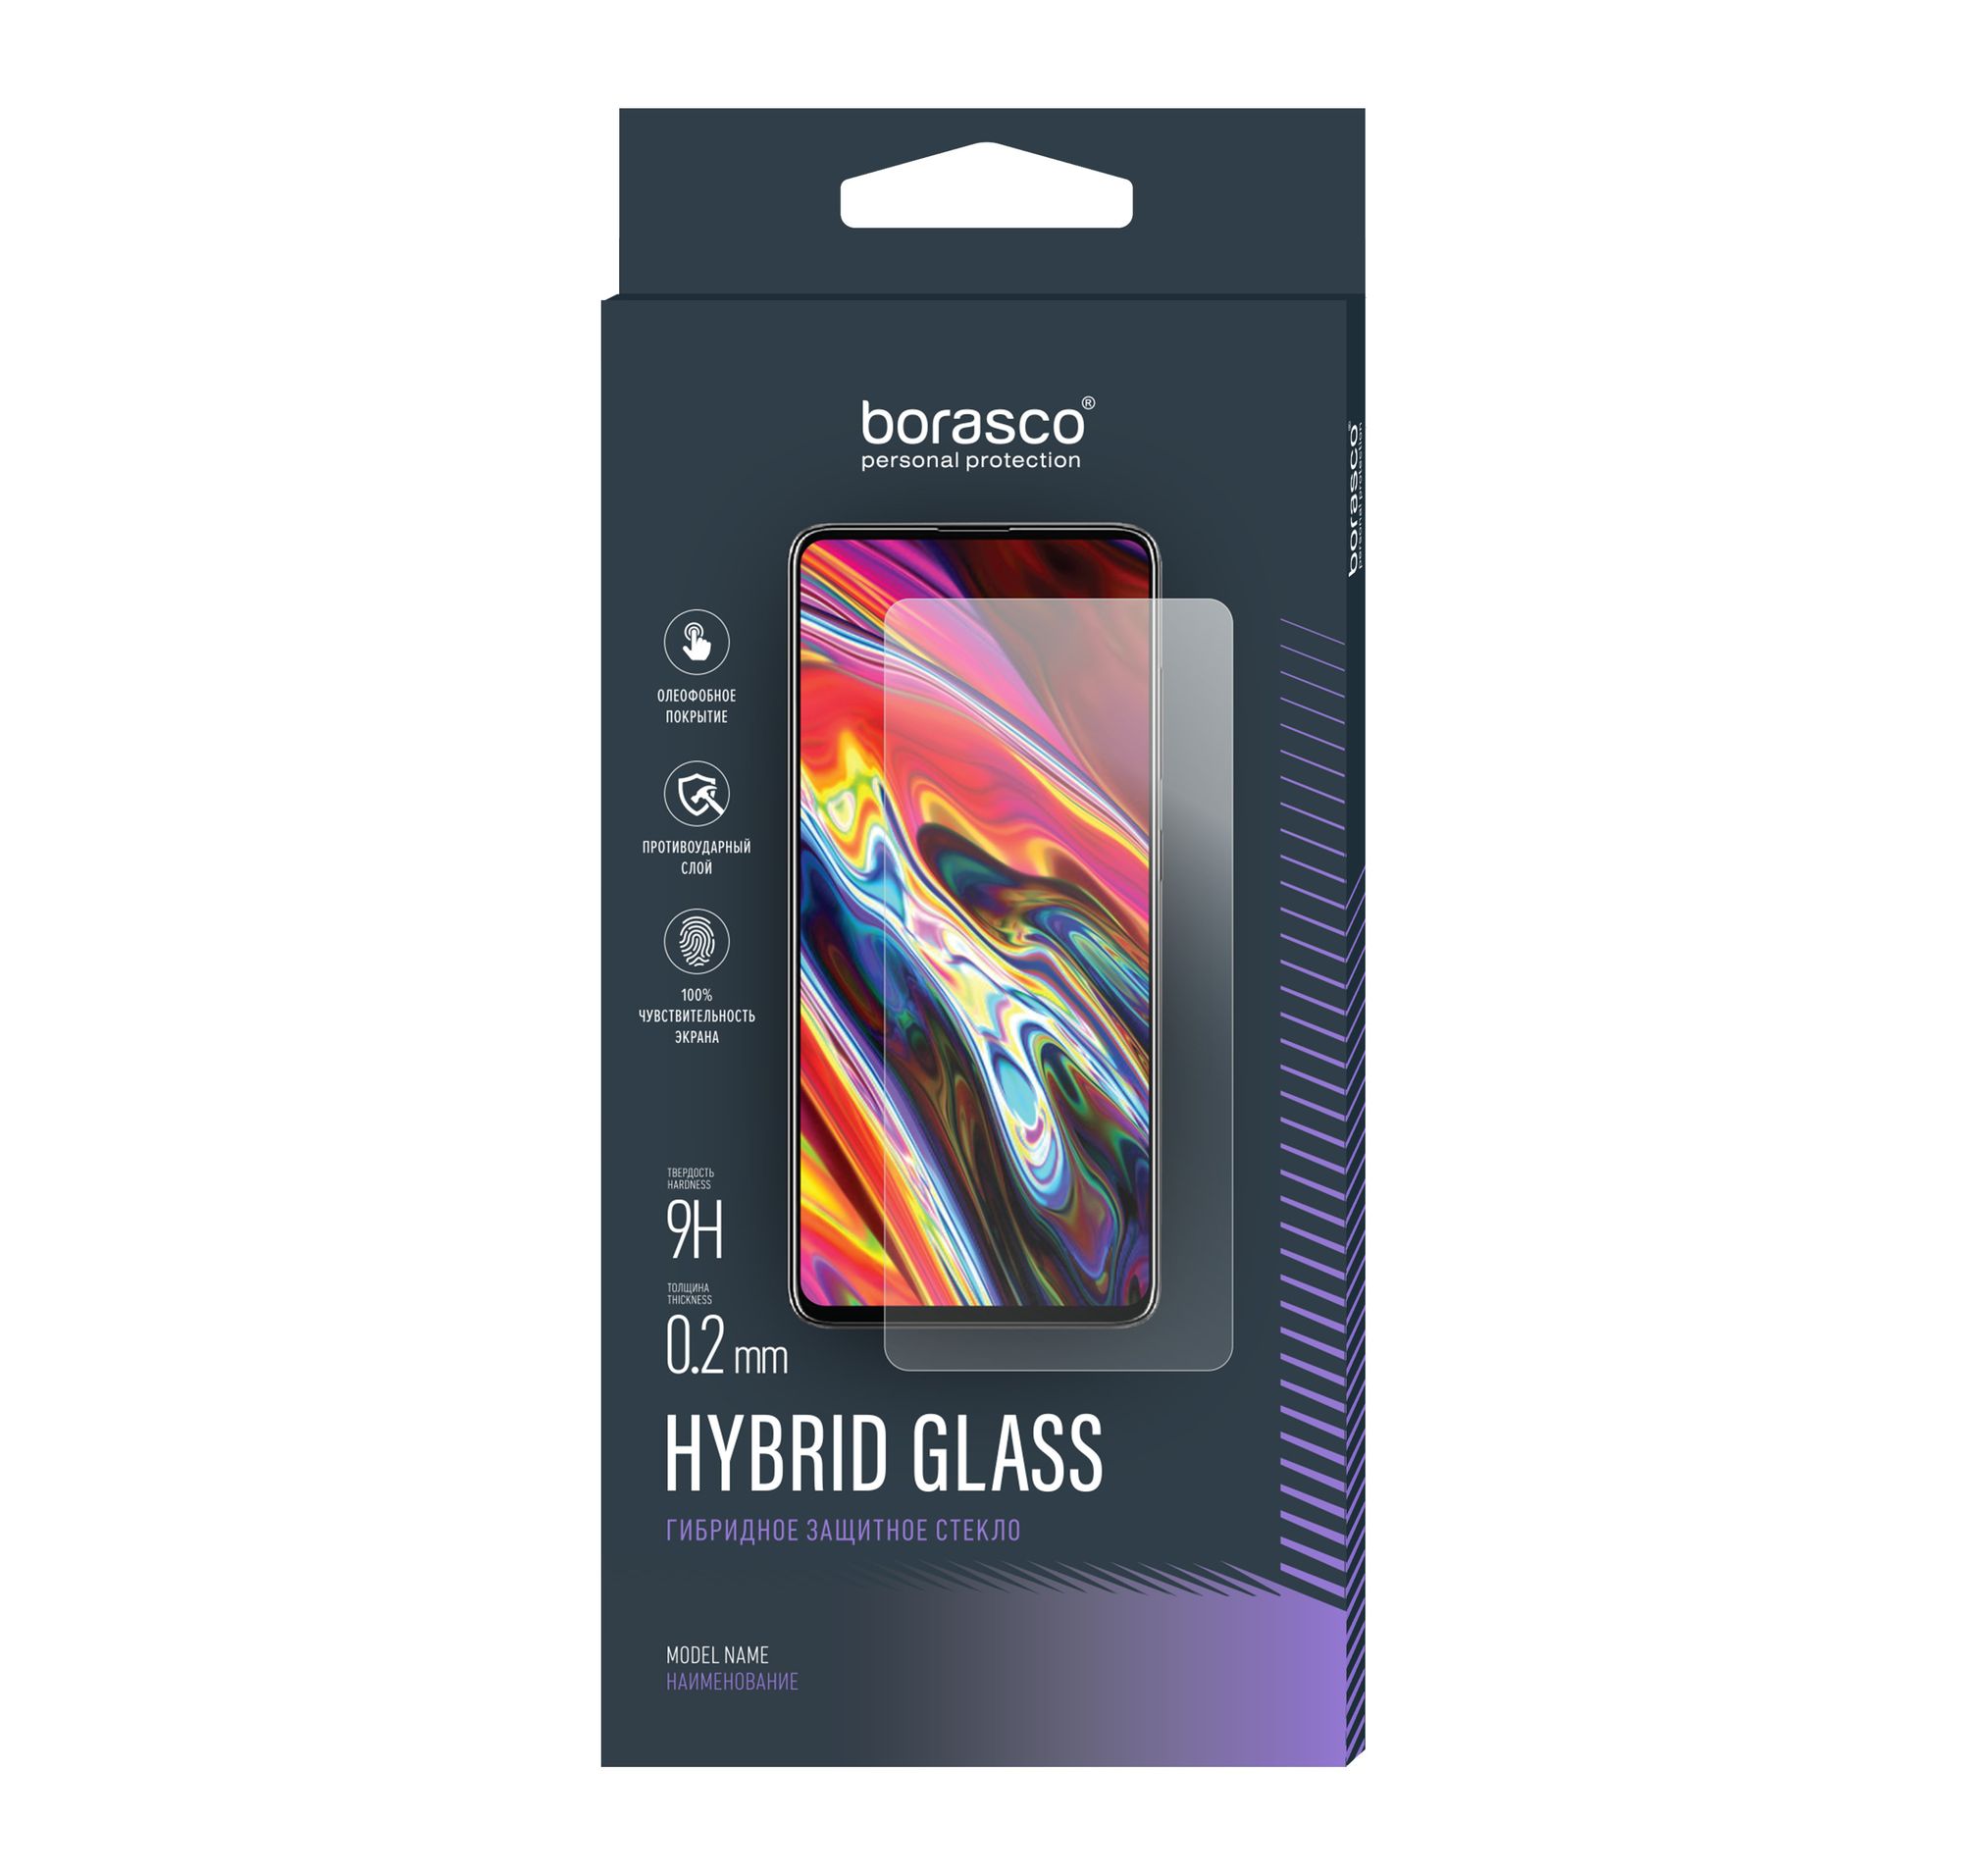 Стекло защитное Hybrid Glass VSP 0,26 мм для Sony Xperia Z5 Compact стекло защитное гибридное матовое krutoff для sony xperia z5 compact